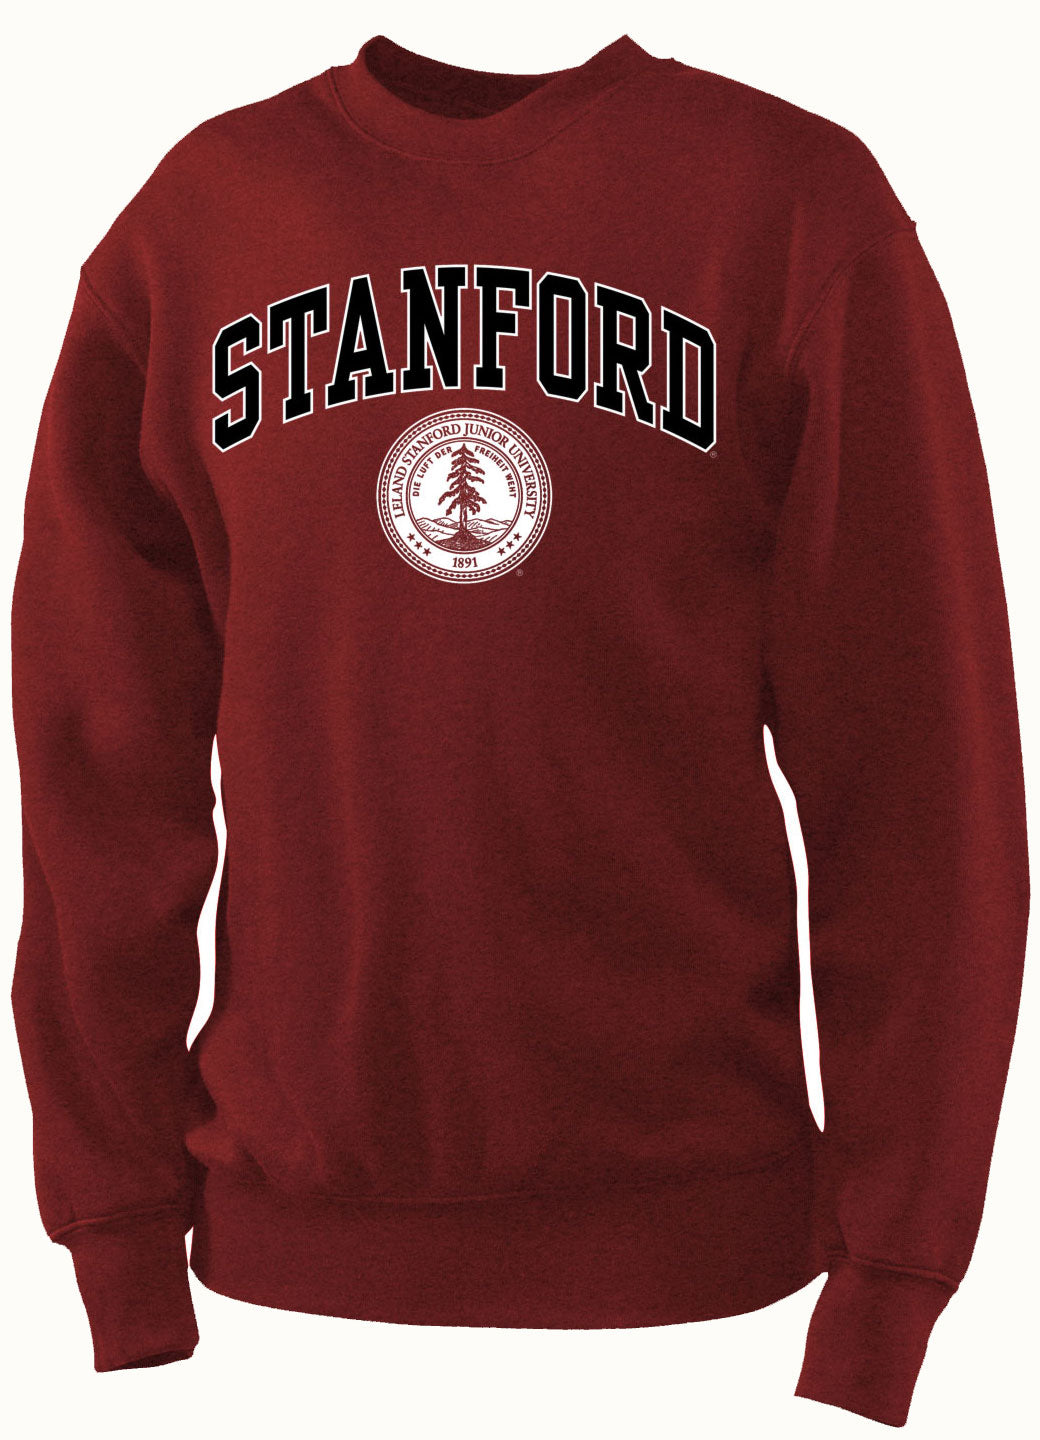 STANFORD UNIVERSITY Hoodies Sweatshirts men women unisex Cotton